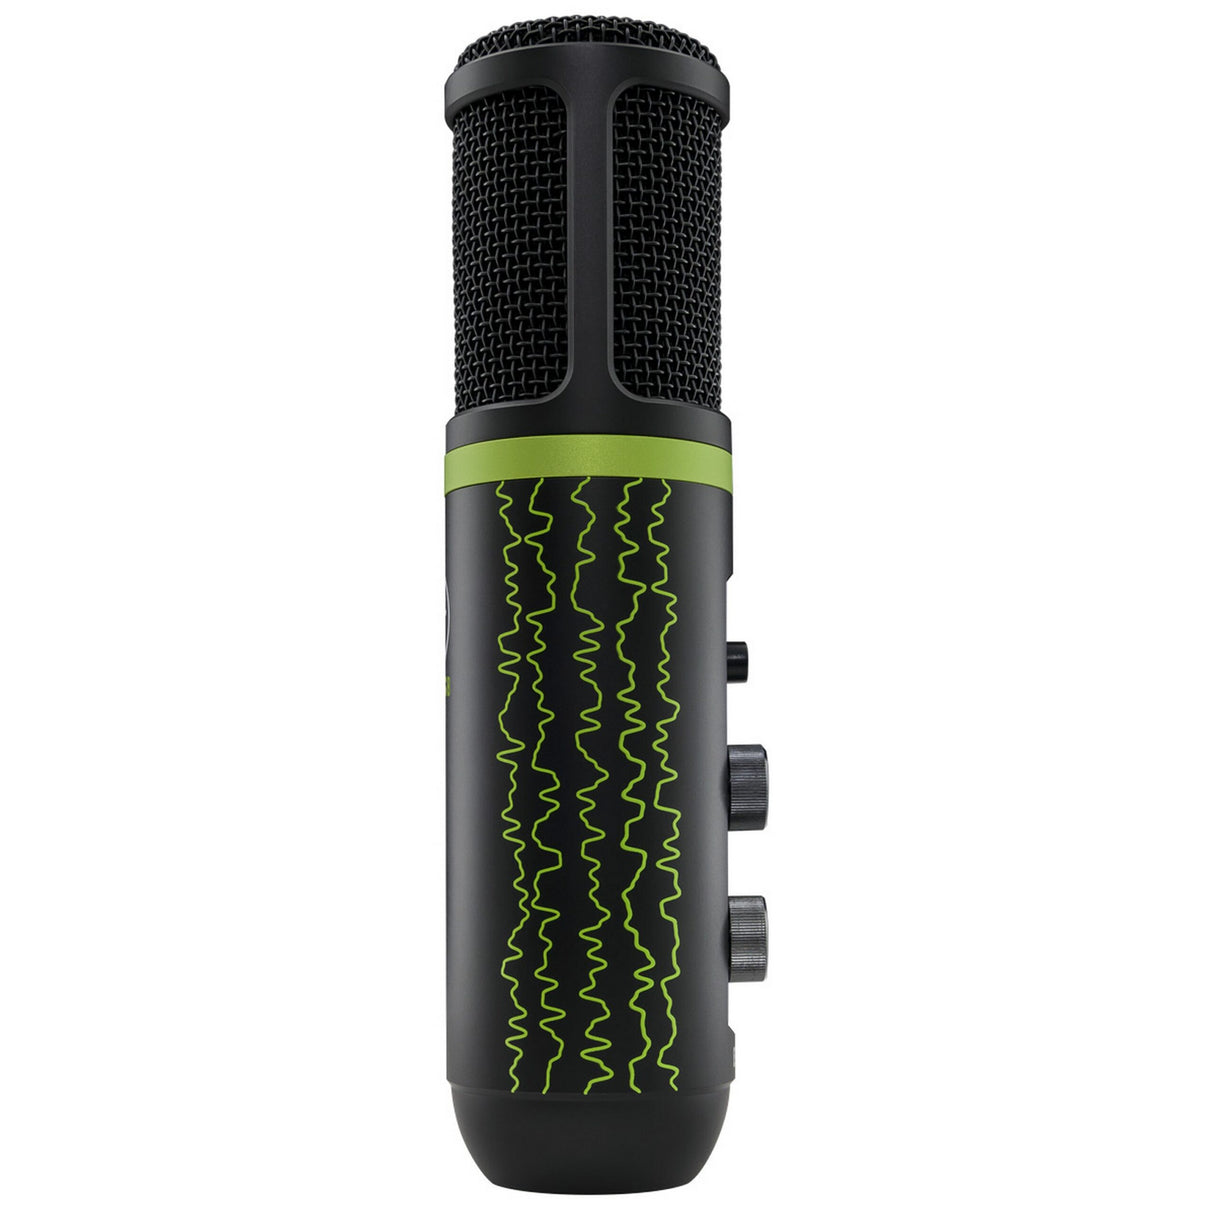 Mackie EM-USB-LTD-GRN EM Series USB Condenser Microphone, Limited Edition Green